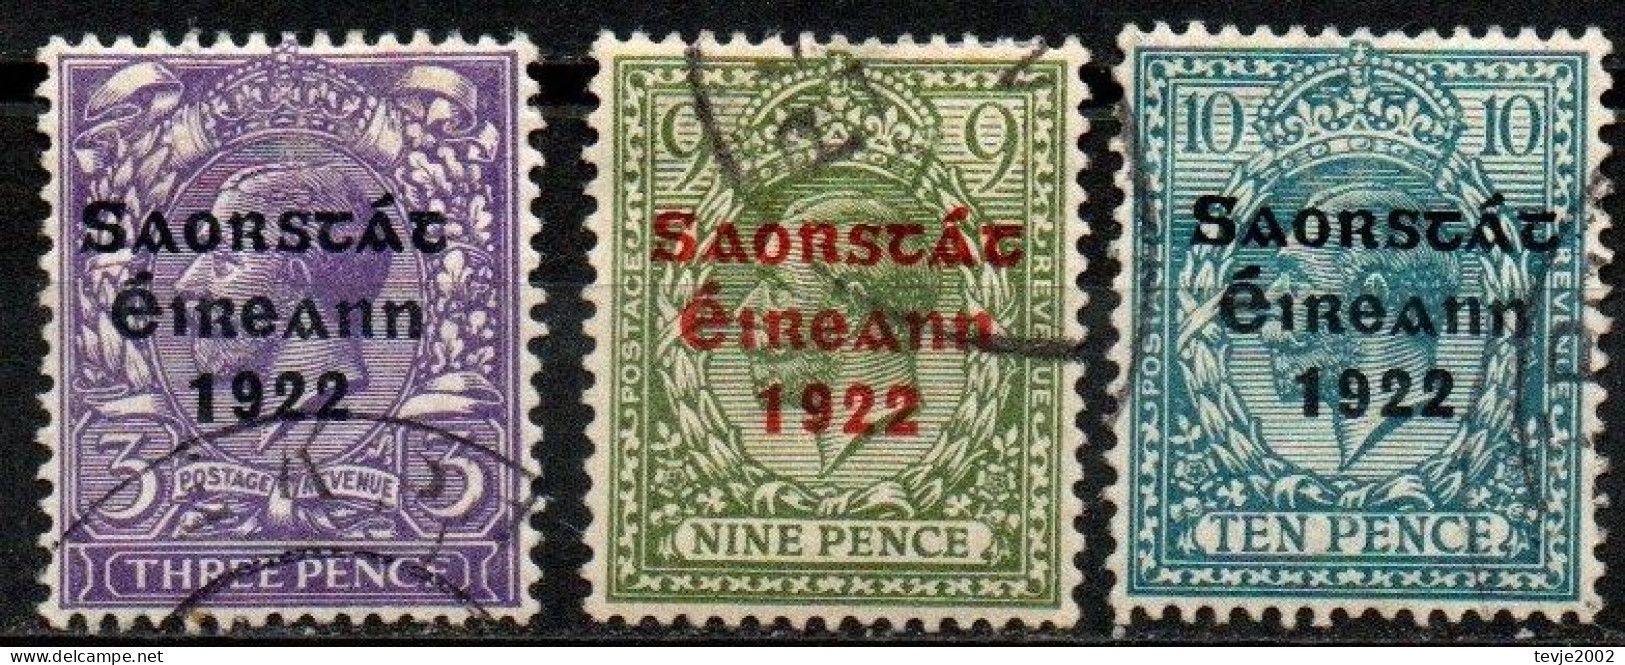 Irland Eire 1922 - Mi.Nr. 30 I + 34 I + 35 I - Gestempelt Used - Usados